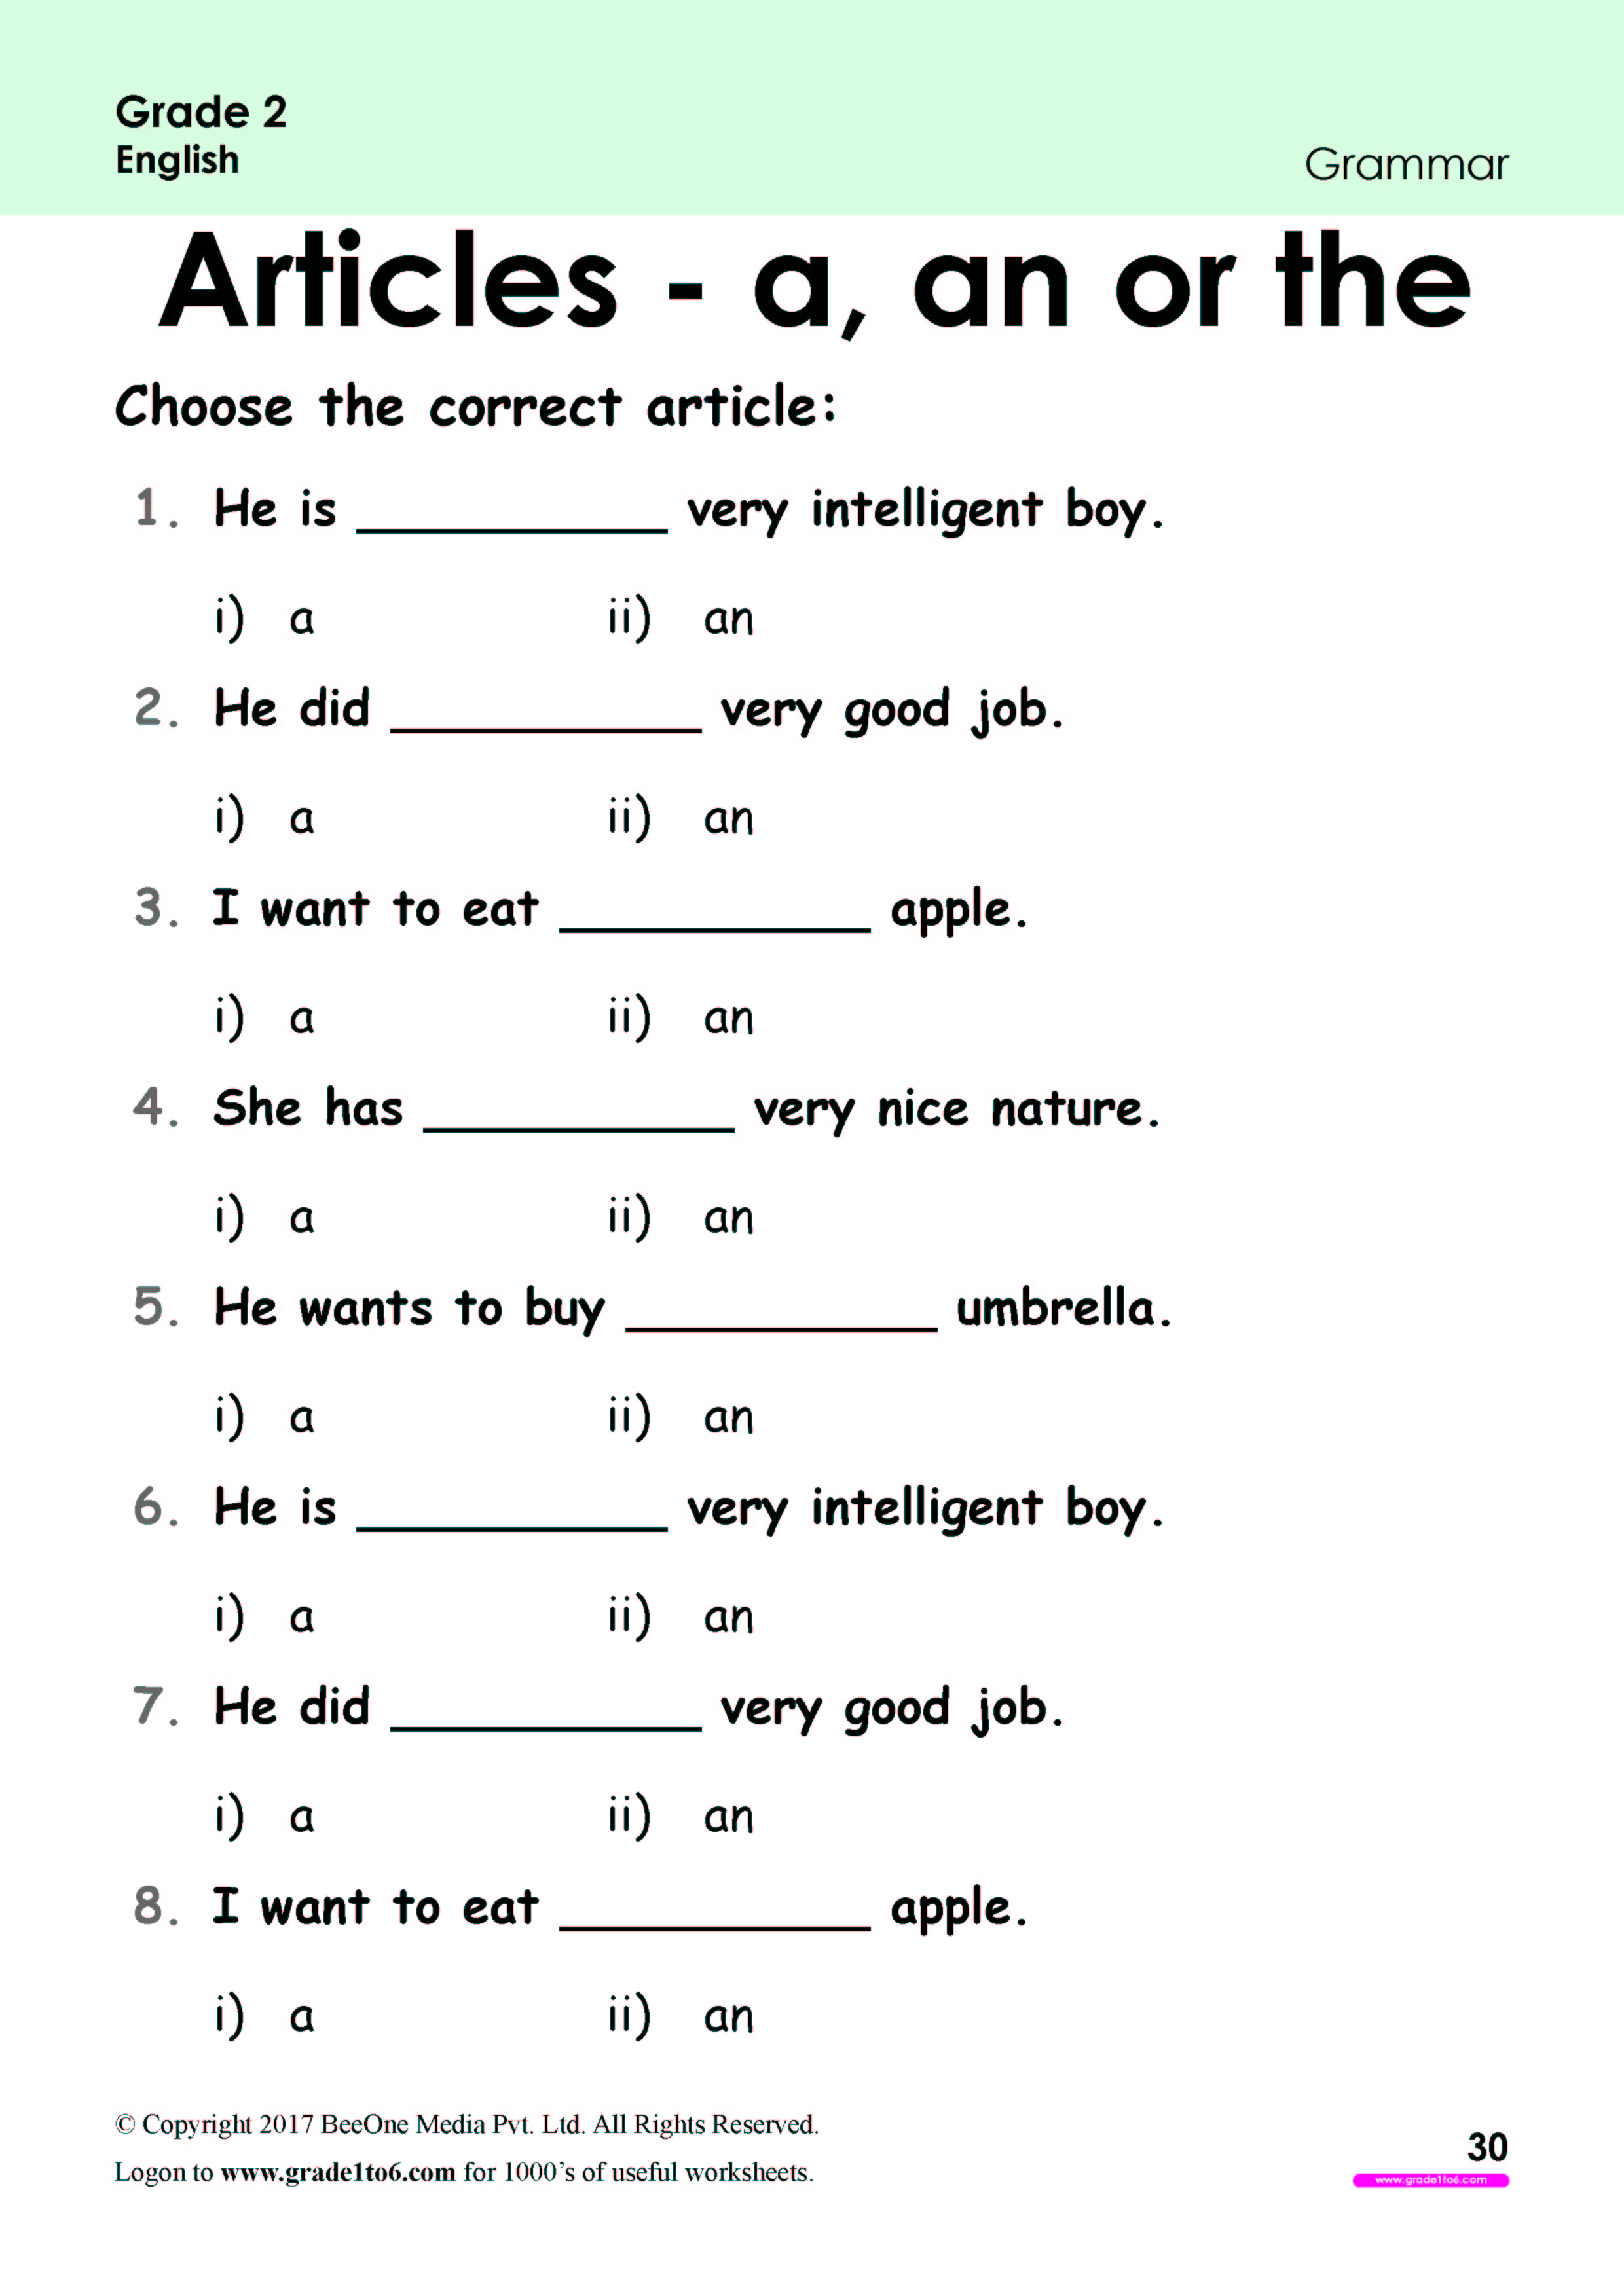 English Grammar Worksheets For Grade 2 Pdf